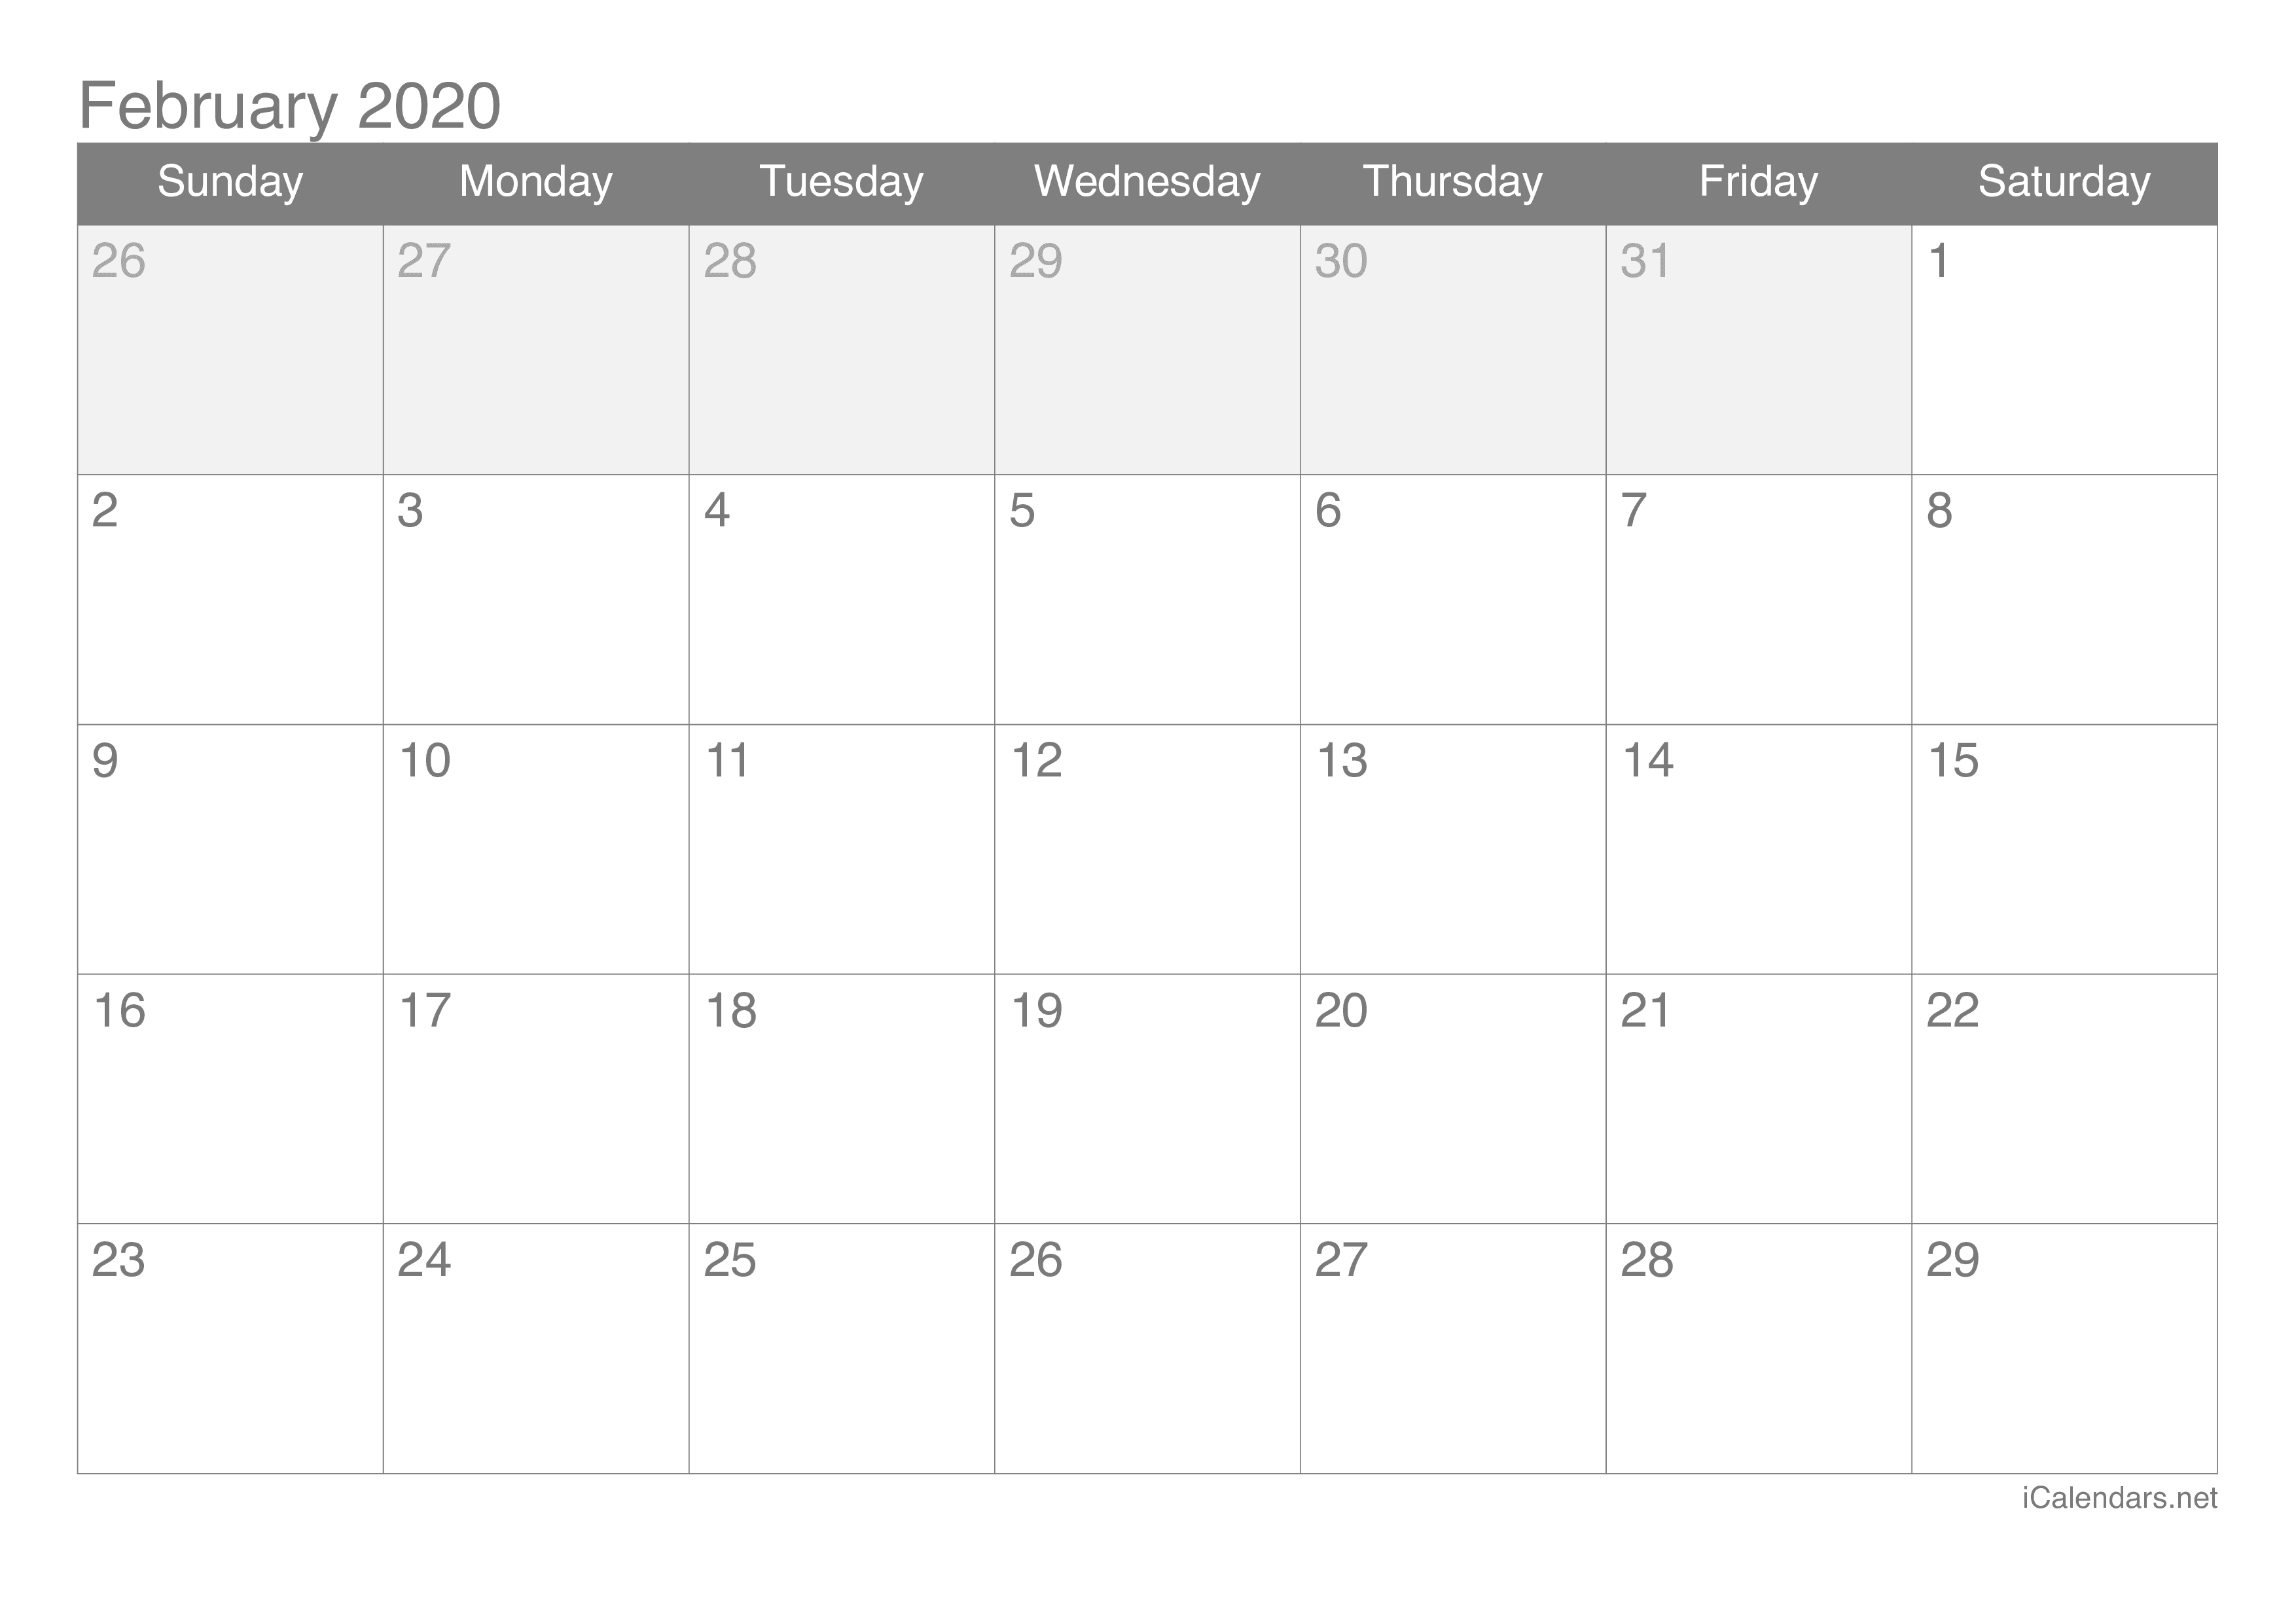 2020 February Calendar